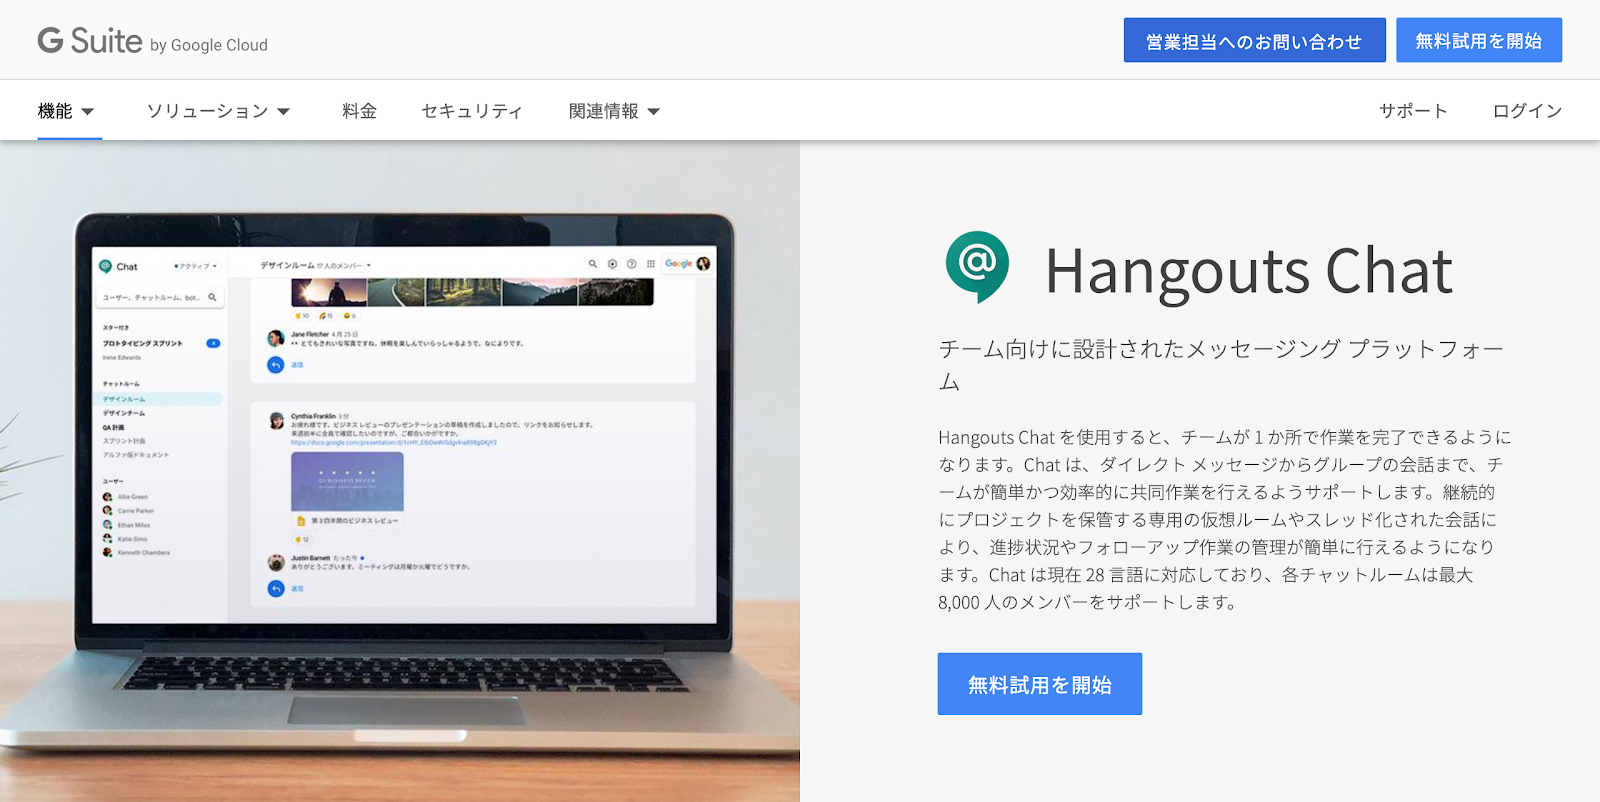 Google Hangouts Chat（グーグル・ハングアウト・チャット）のキャプチャ